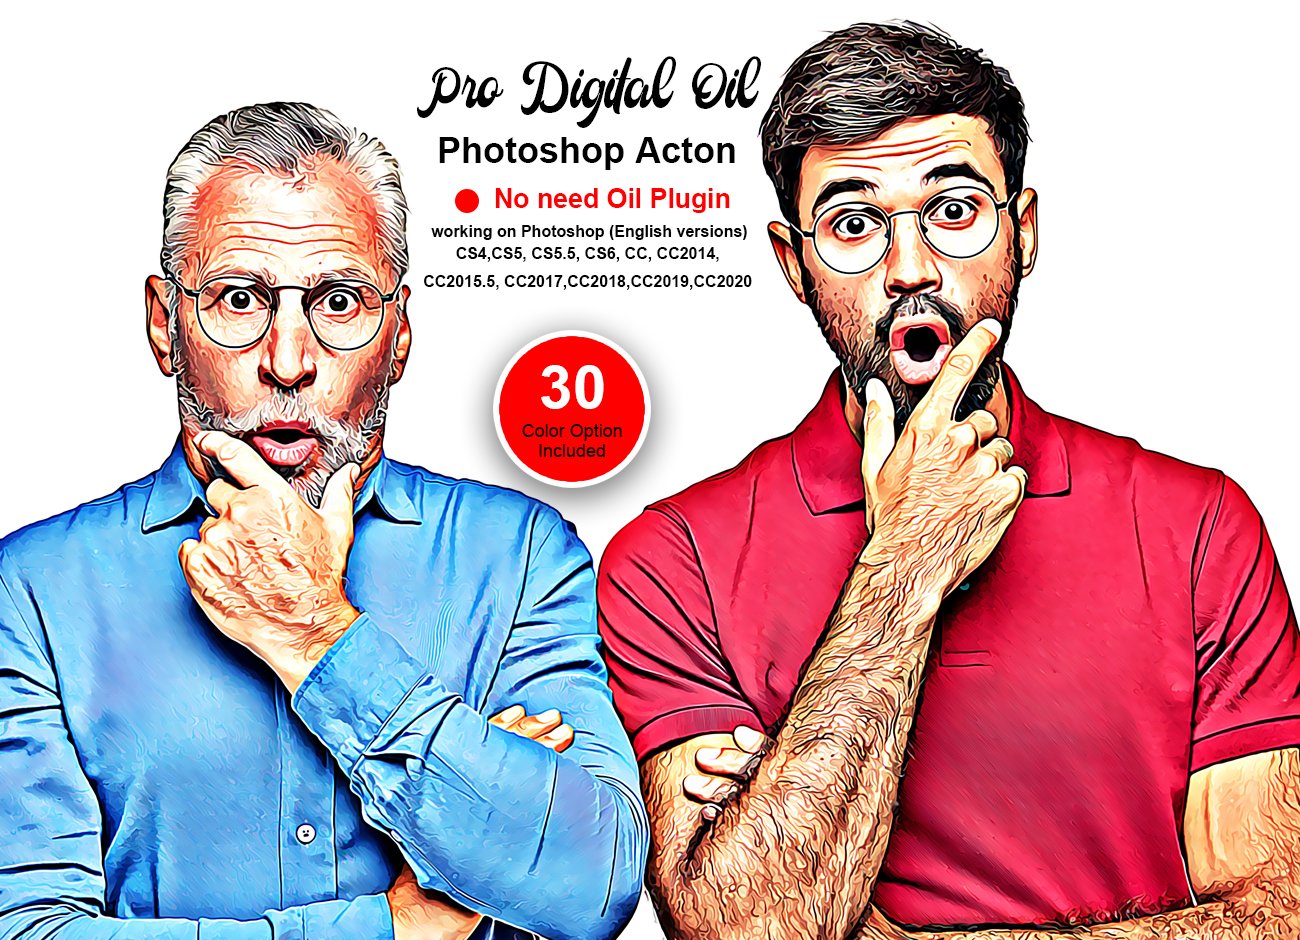 Pro Digital Oil Photoshop Actioncover image.